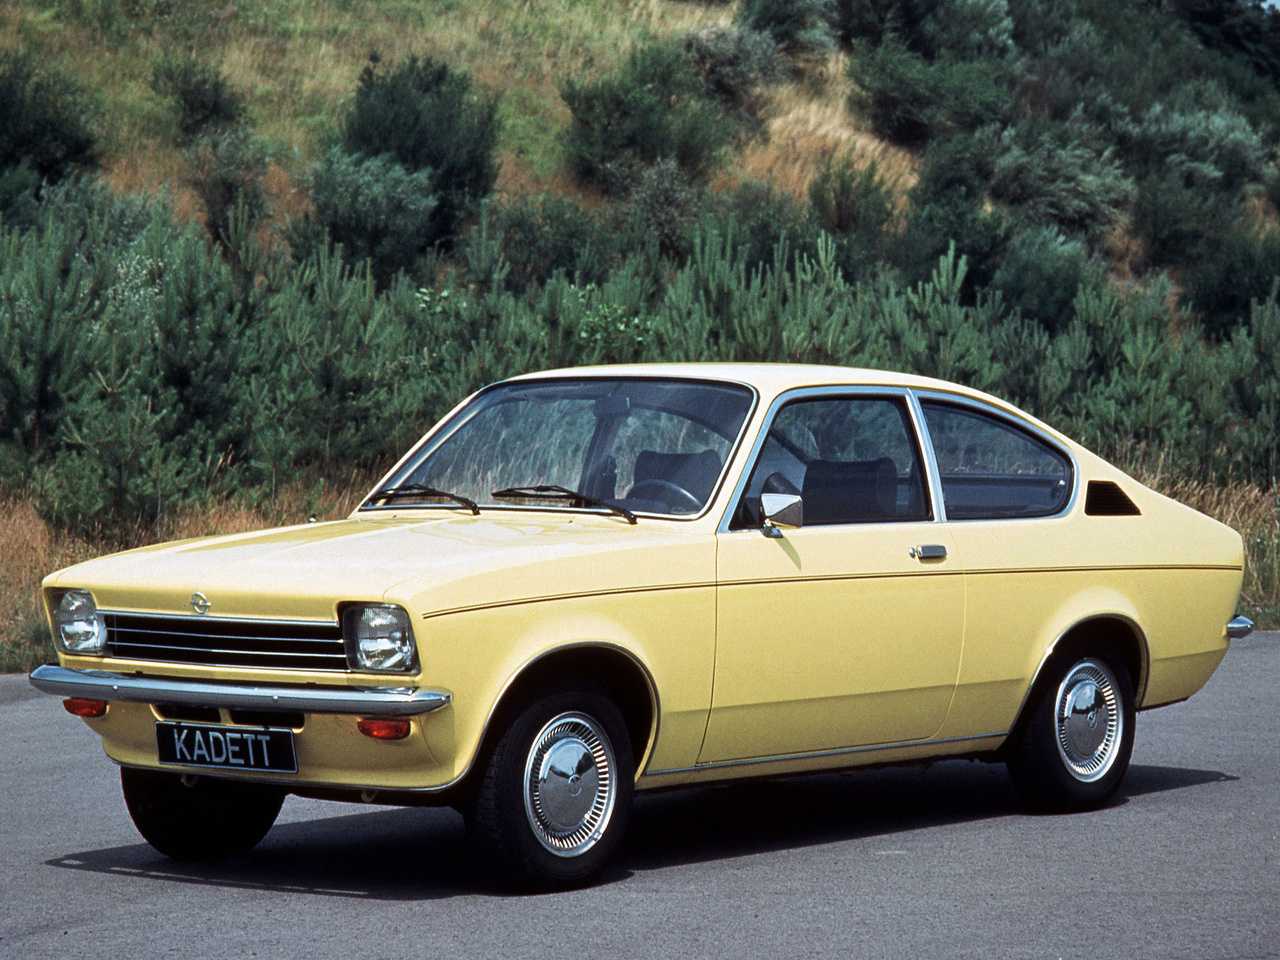 Opel kadett к38 немец который смог | drive2 | все о авто, скутерах и мопедах